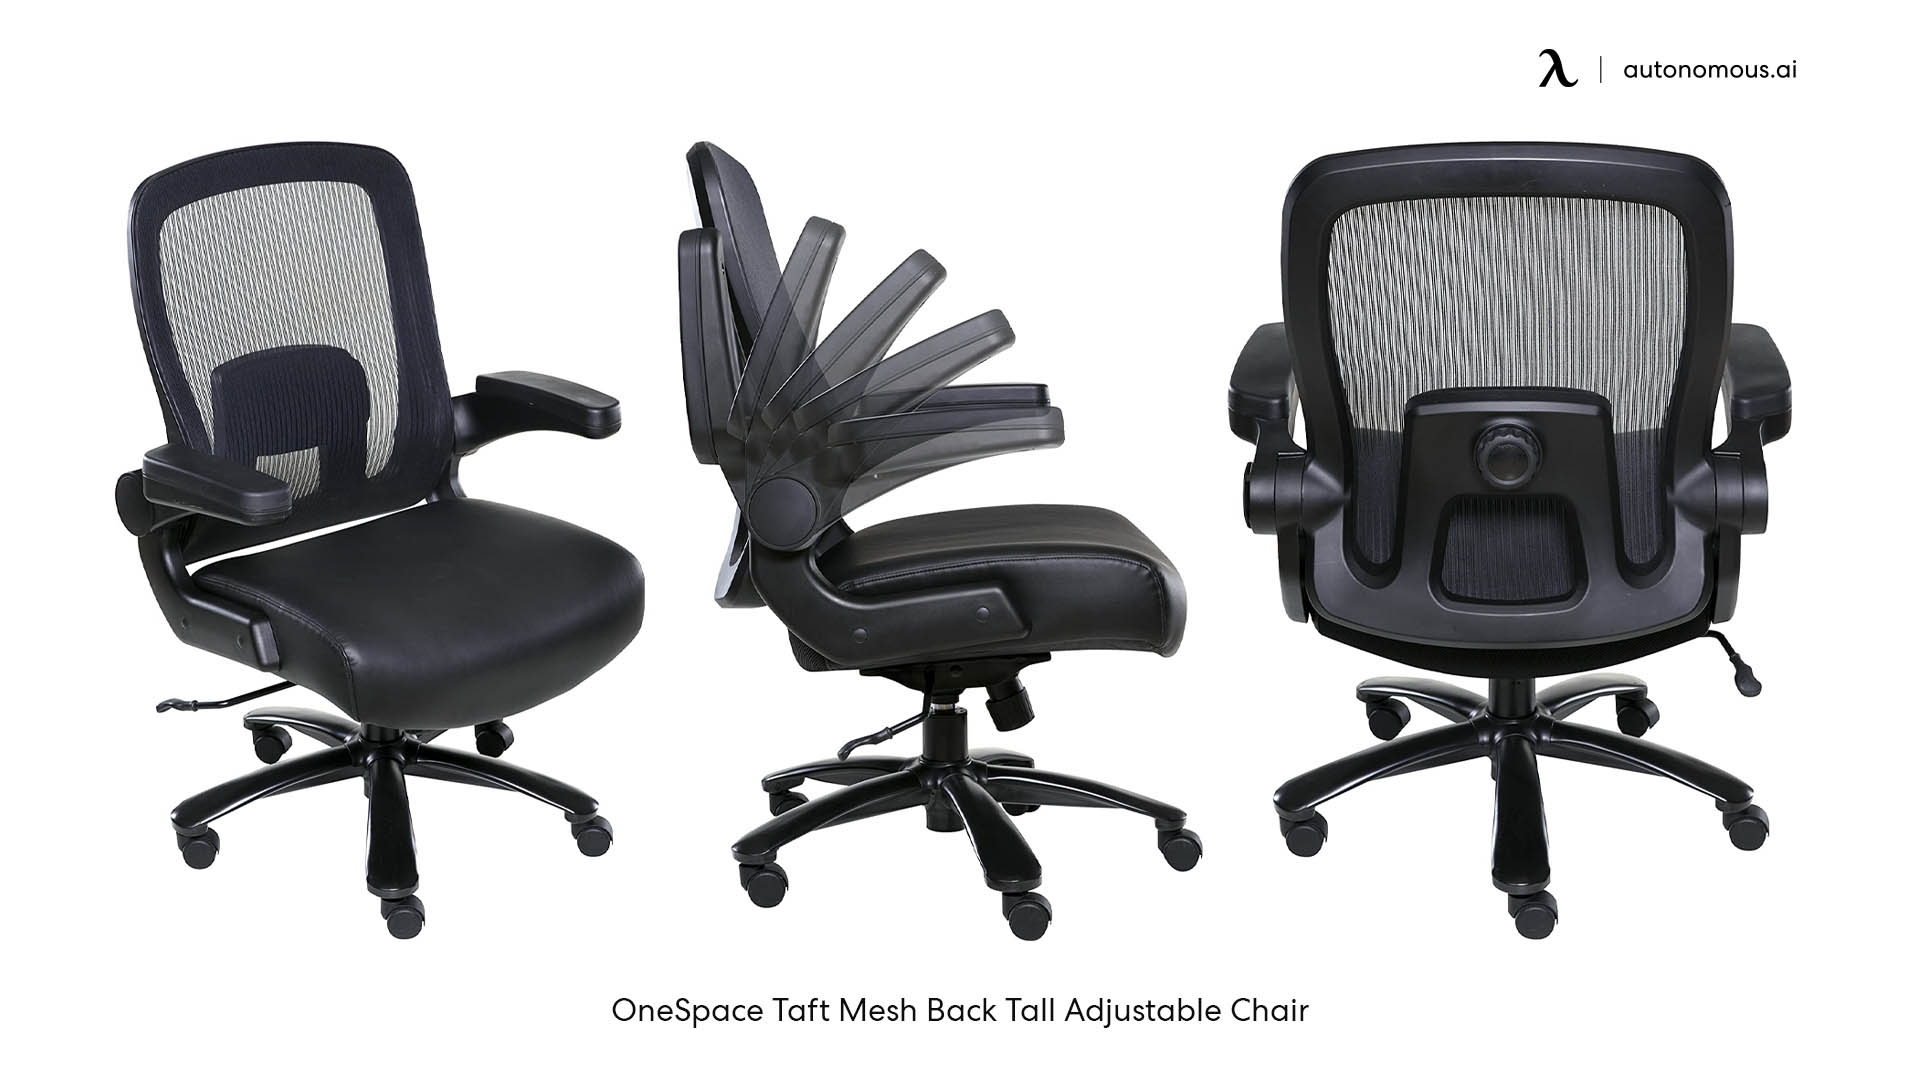 OneSpace Taft Mesh Back Tall Adjustable Chair